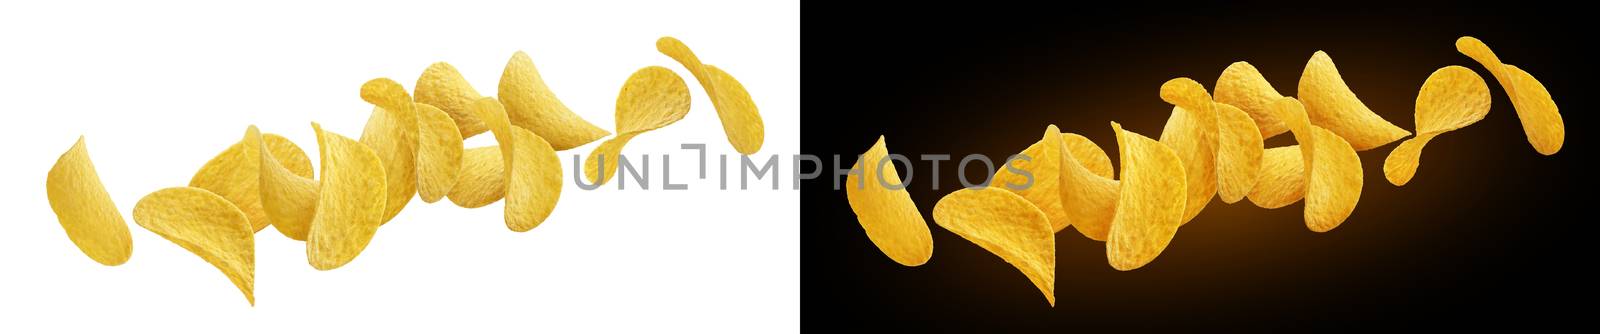 Falling potato chips isolated on white and black backgrounds, flying potato crisps